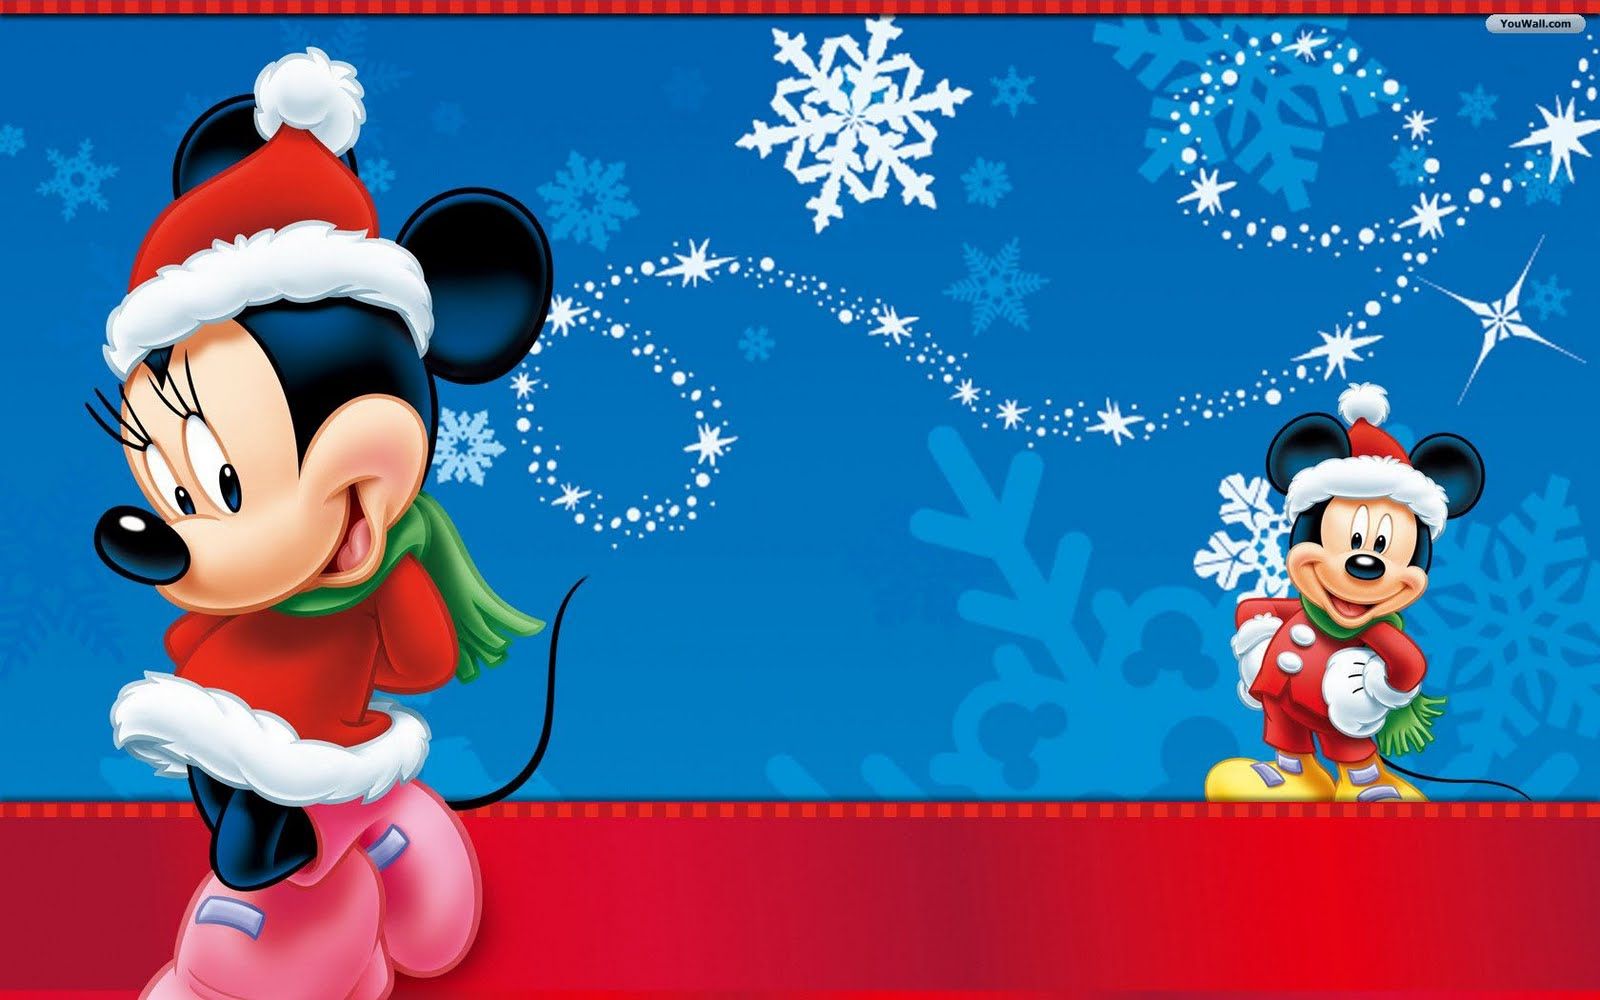 Christmas Background. Disney Christmas Wallpaper. Wallpaper Mansion. Disney christmas, Disney merry christmas, Disney holiday